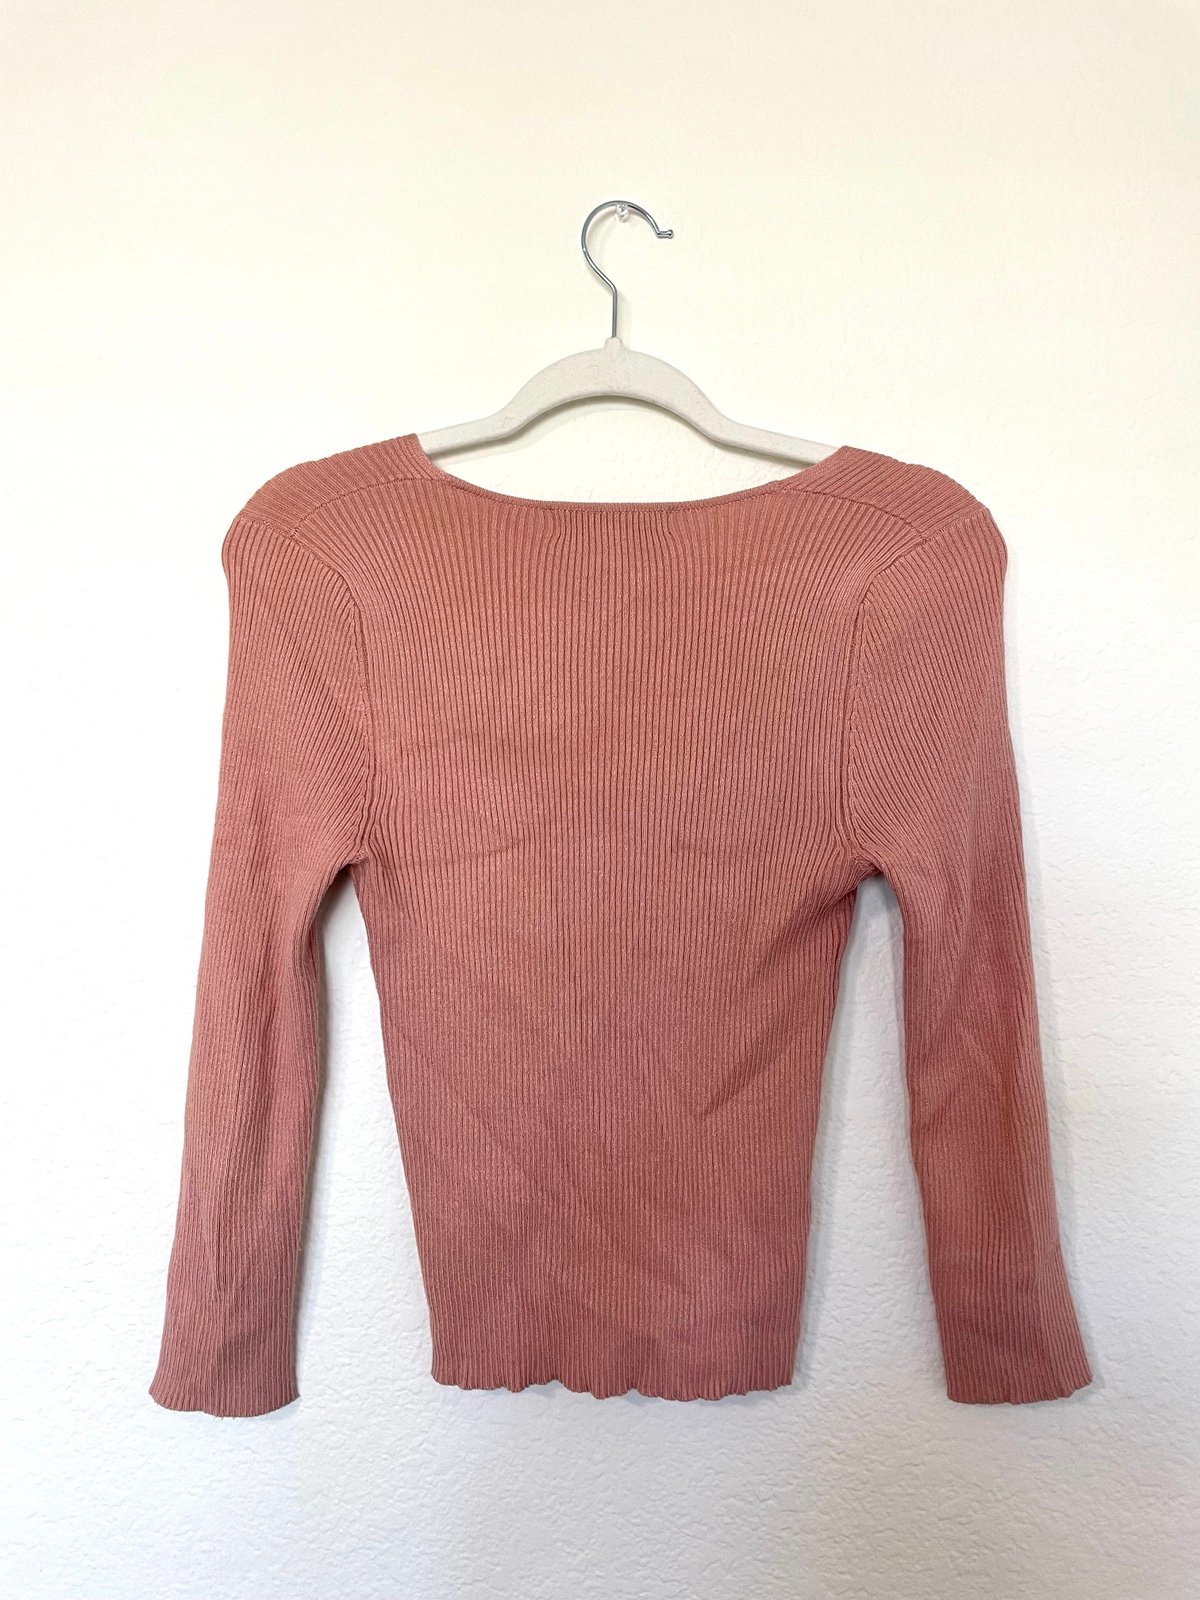 the Lowest price Sweater p2gDHR5Tj Hot Sale